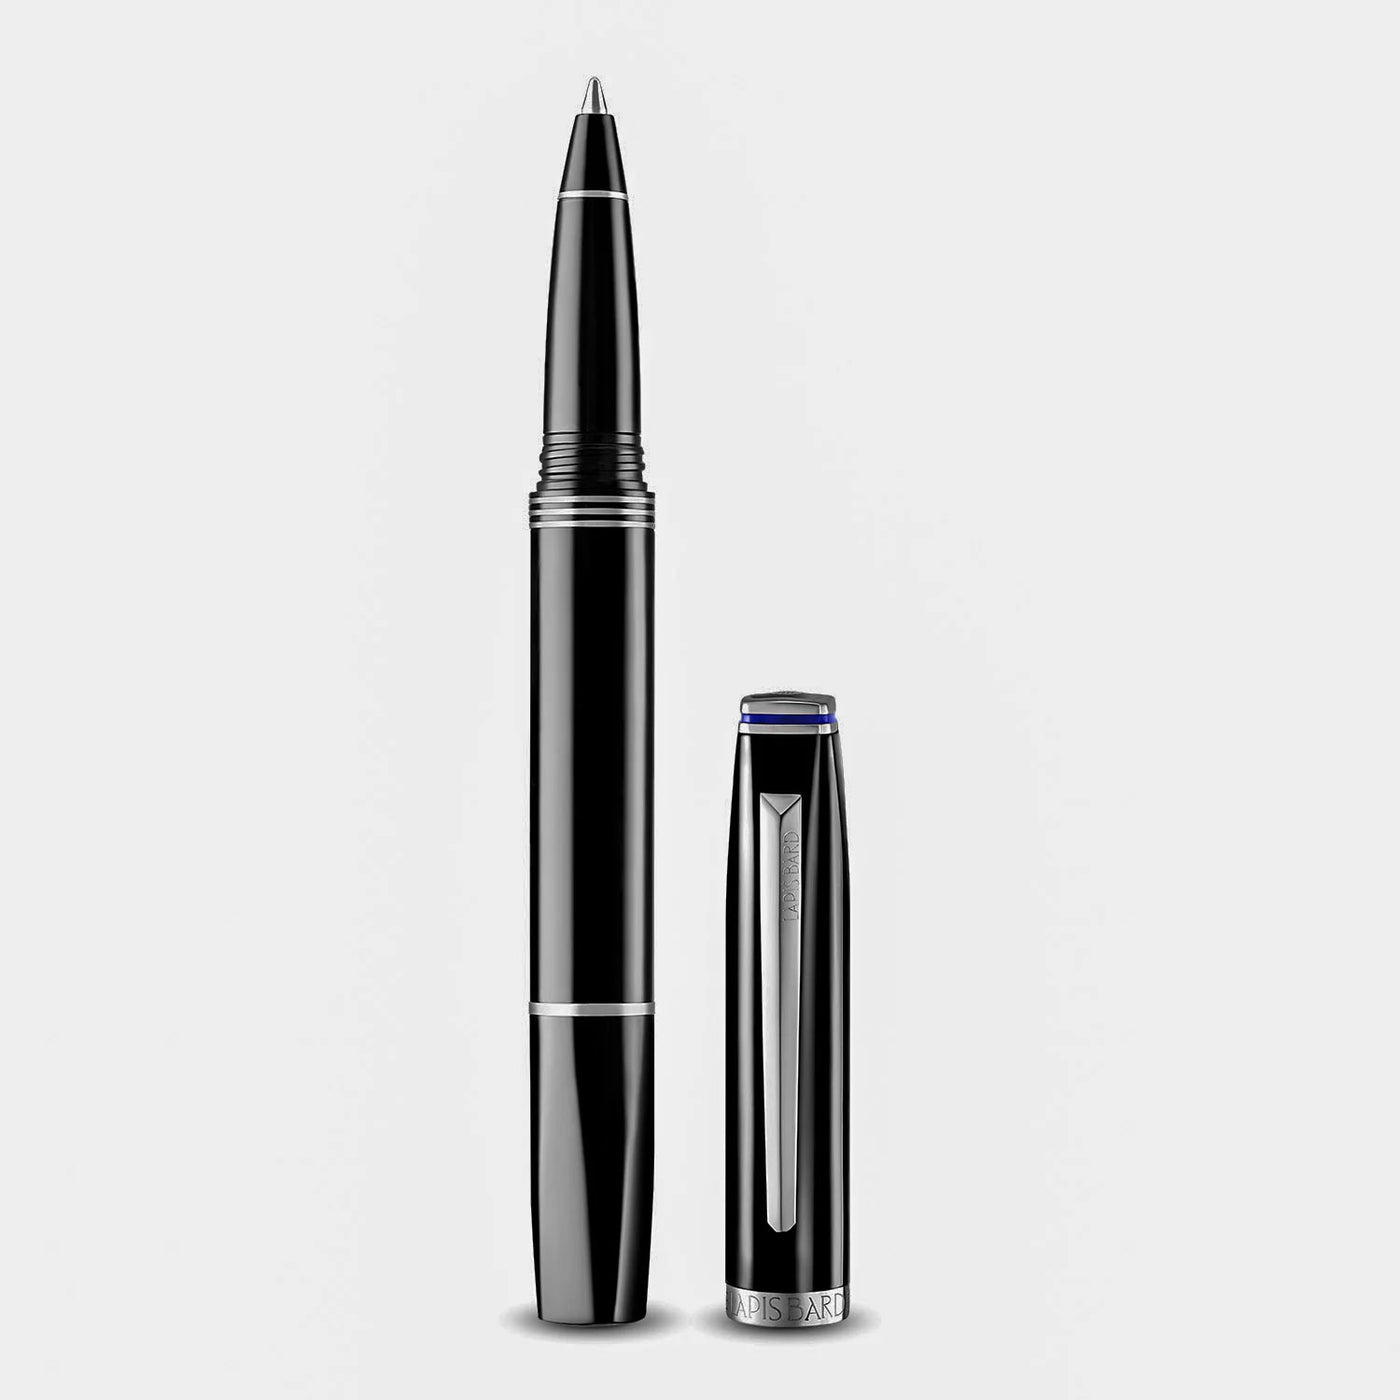 Lapis Bard Contemporary Roller Ball Pen - Black CT 3